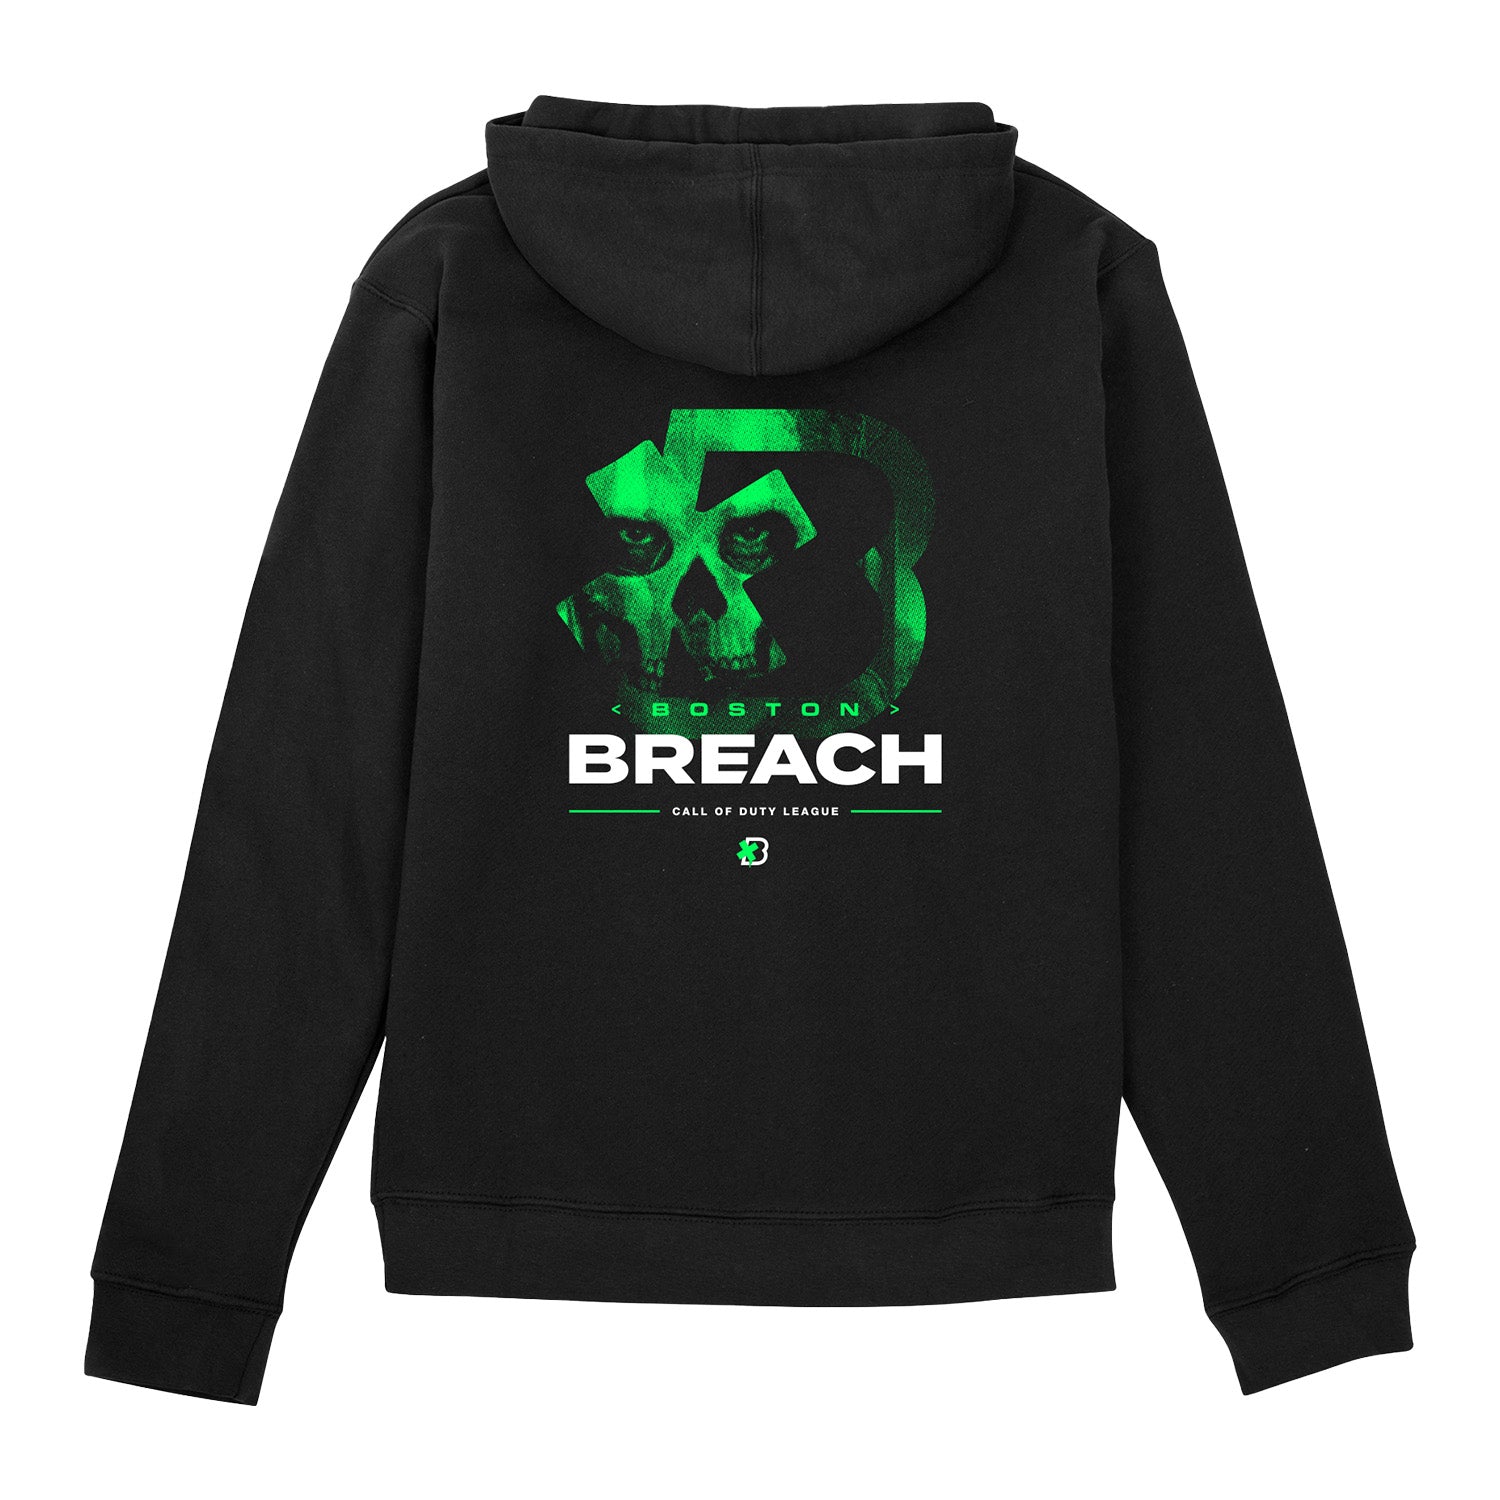 Boston Breach Ghost Logo Black Hoodie - Back View